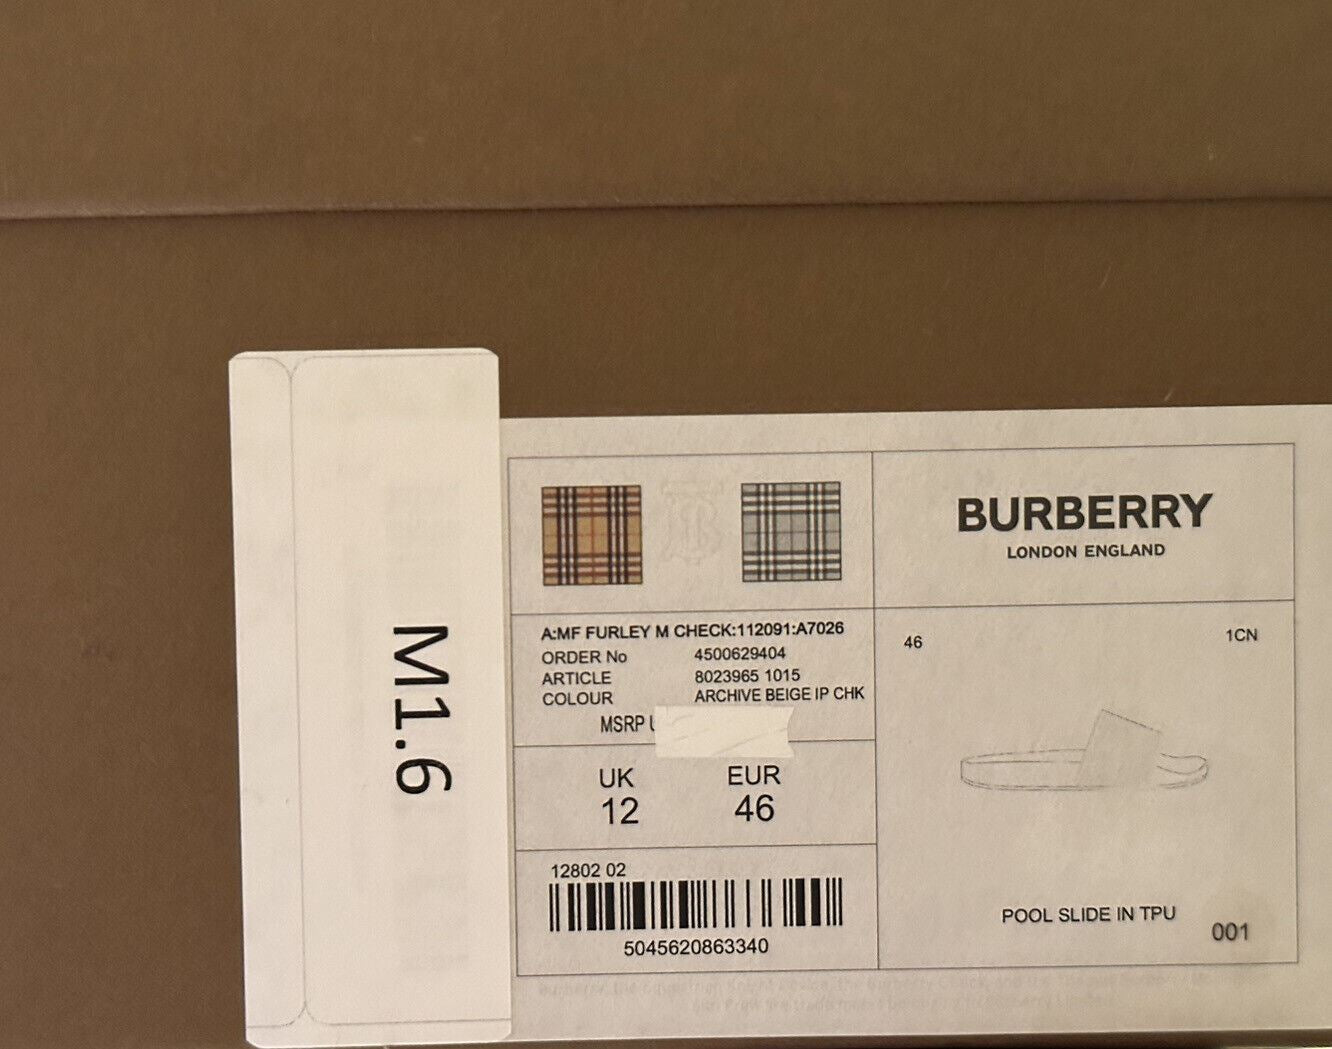 NIB Burberry Vintage Check Archive Бежевые шлепанцы 13 США (46 евро) 8023965 